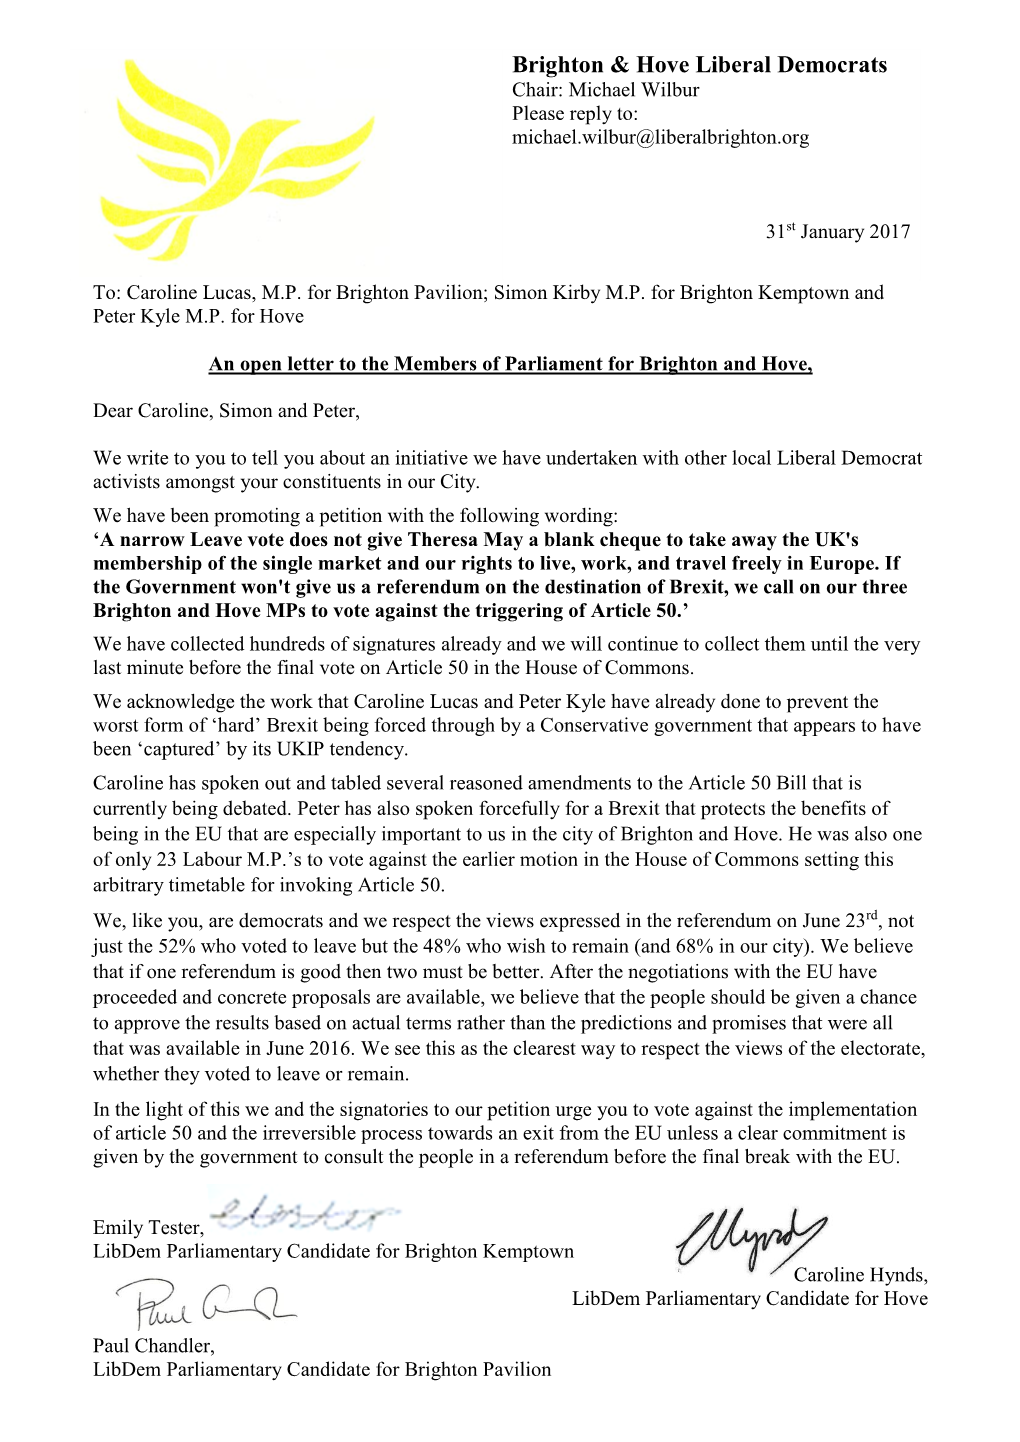 Brighton and Hove Lib Dems Letter To